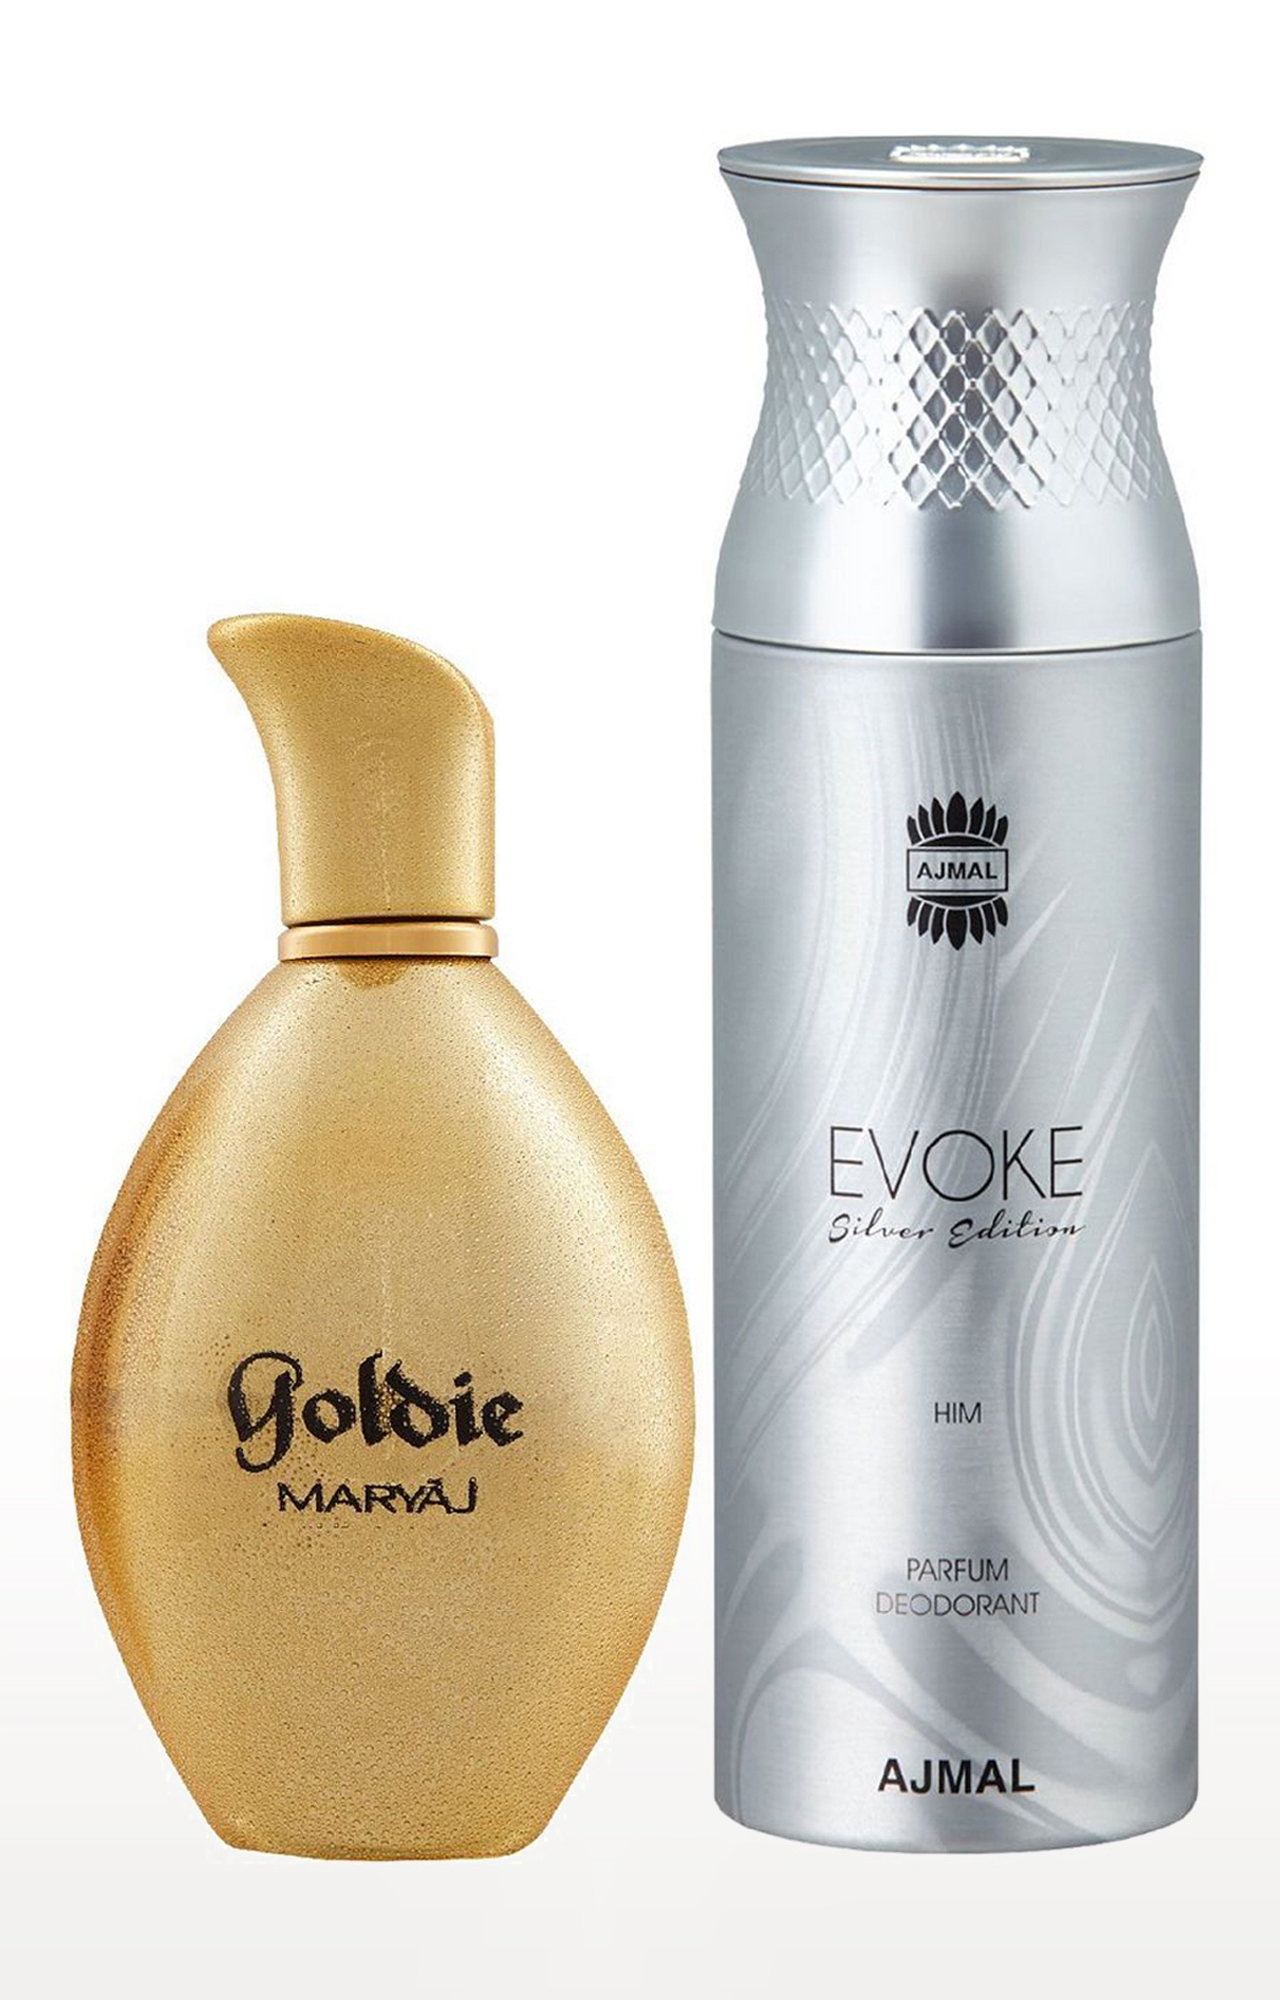 Maryaj Goldie Eau De Parfum Fruity Perfume 100ml for Women and Ajmal Evoke Silver Edition Him Deodorant Fragrance 200ml for Men